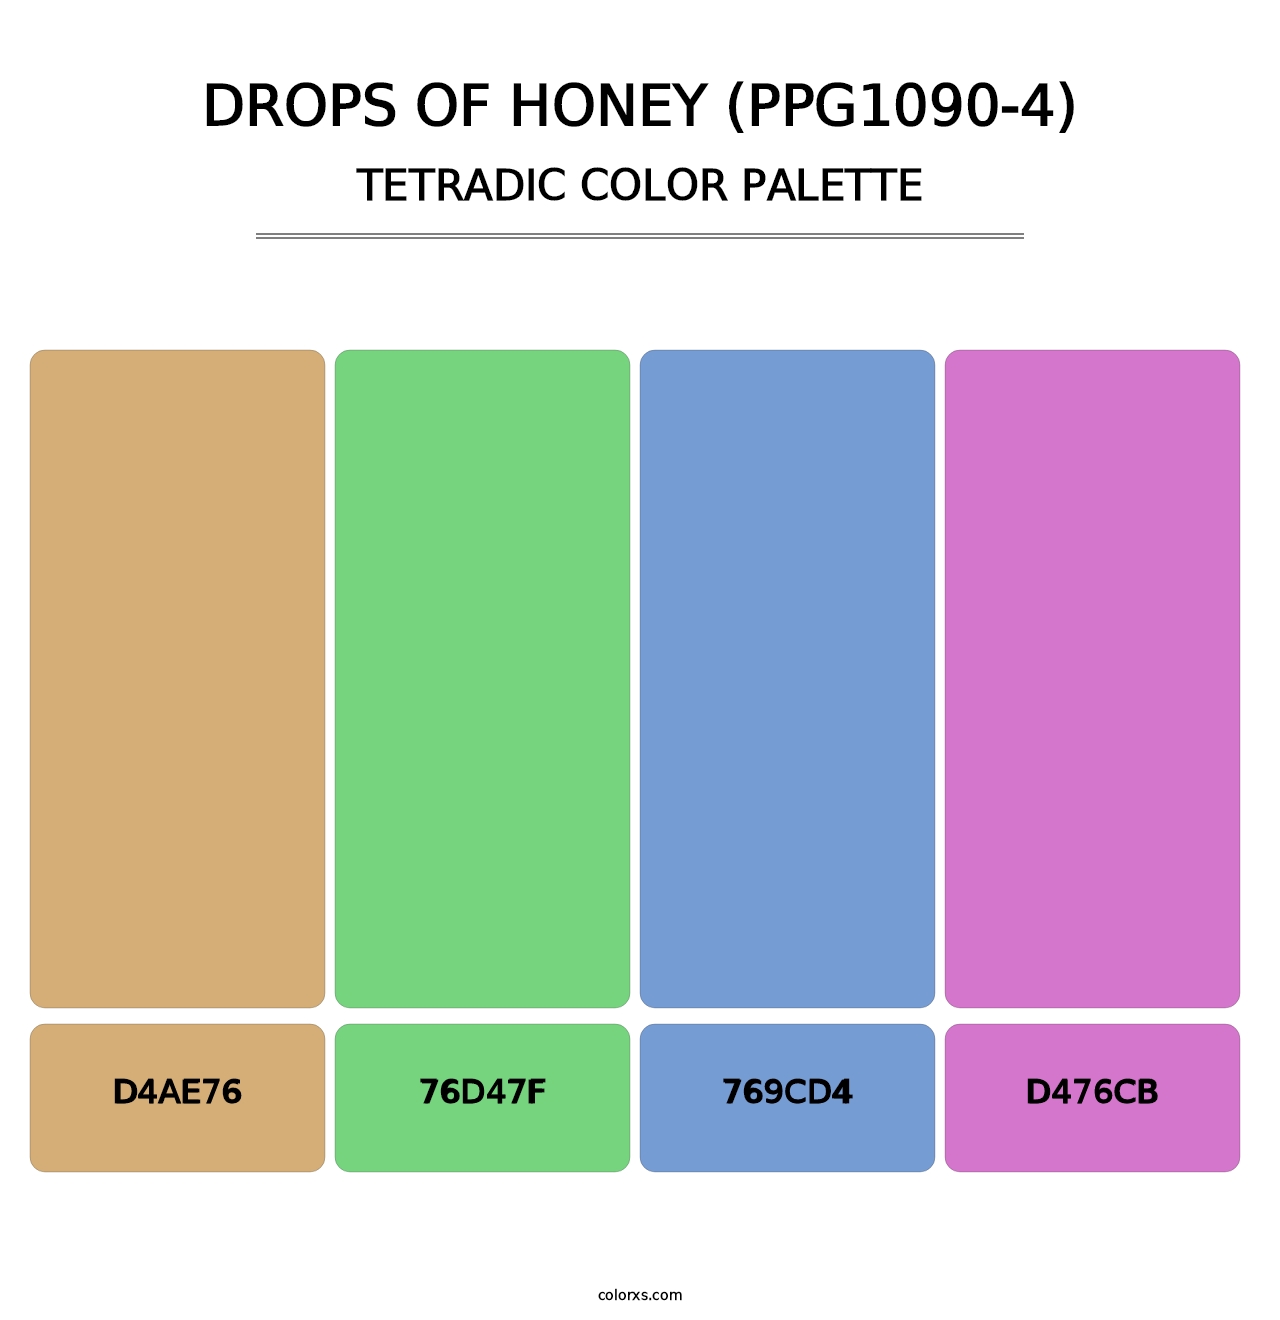 Drops Of Honey (PPG1090-4) - Tetradic Color Palette